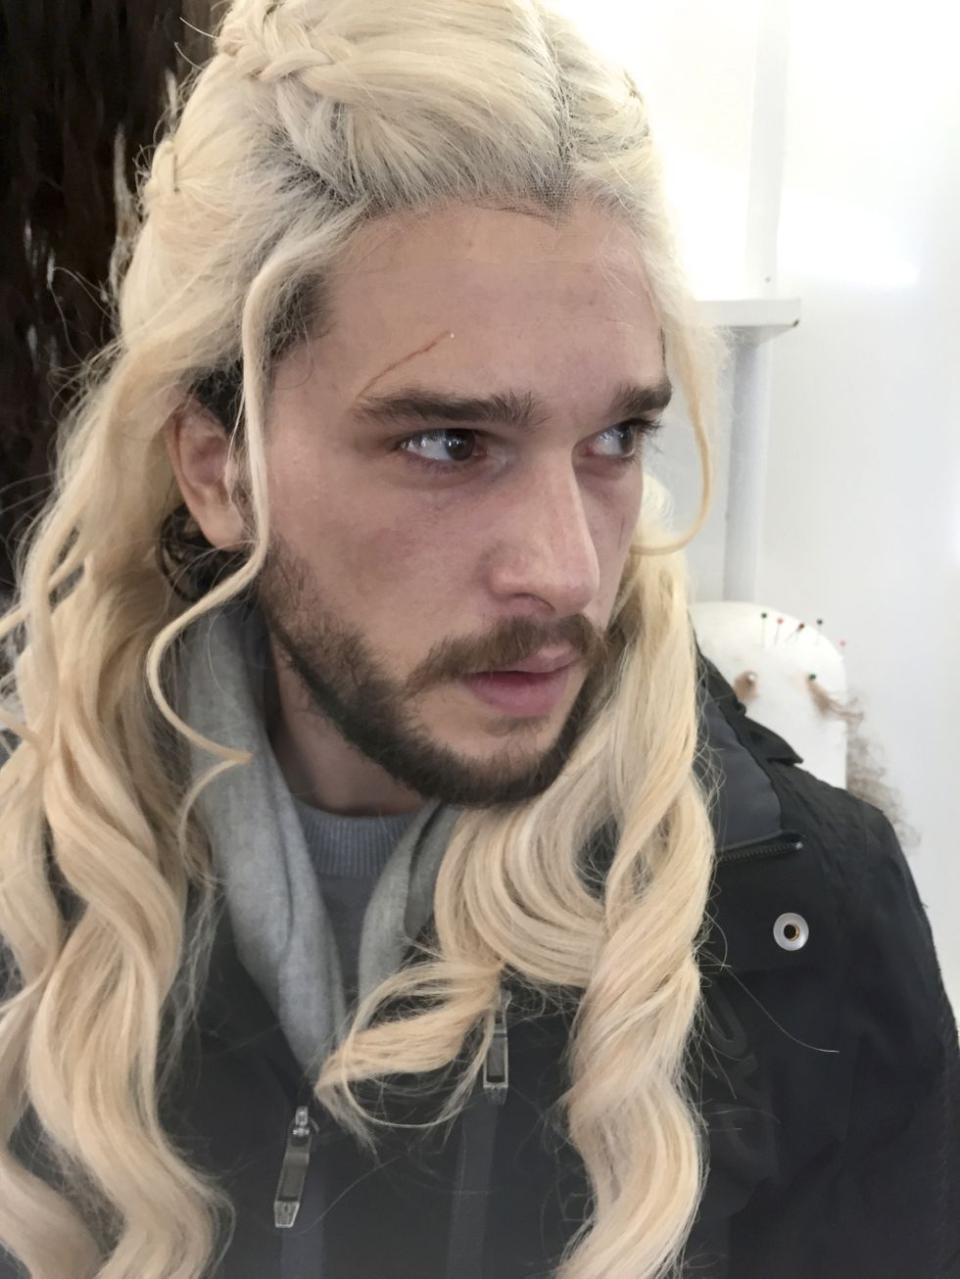 Harington wearing Daenerys's wig